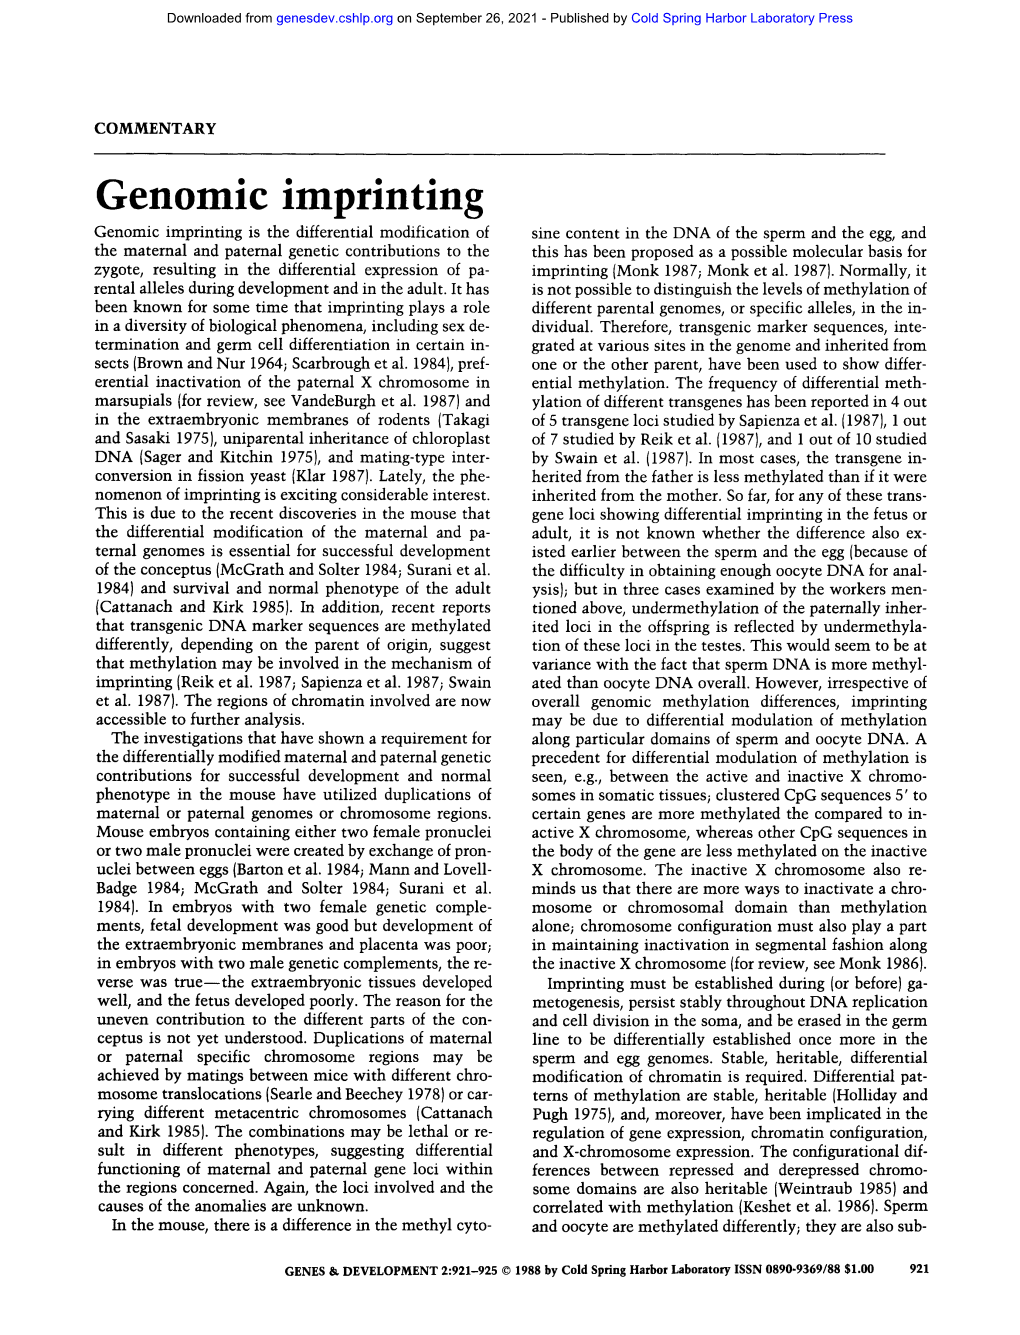 Genomic Imprinting